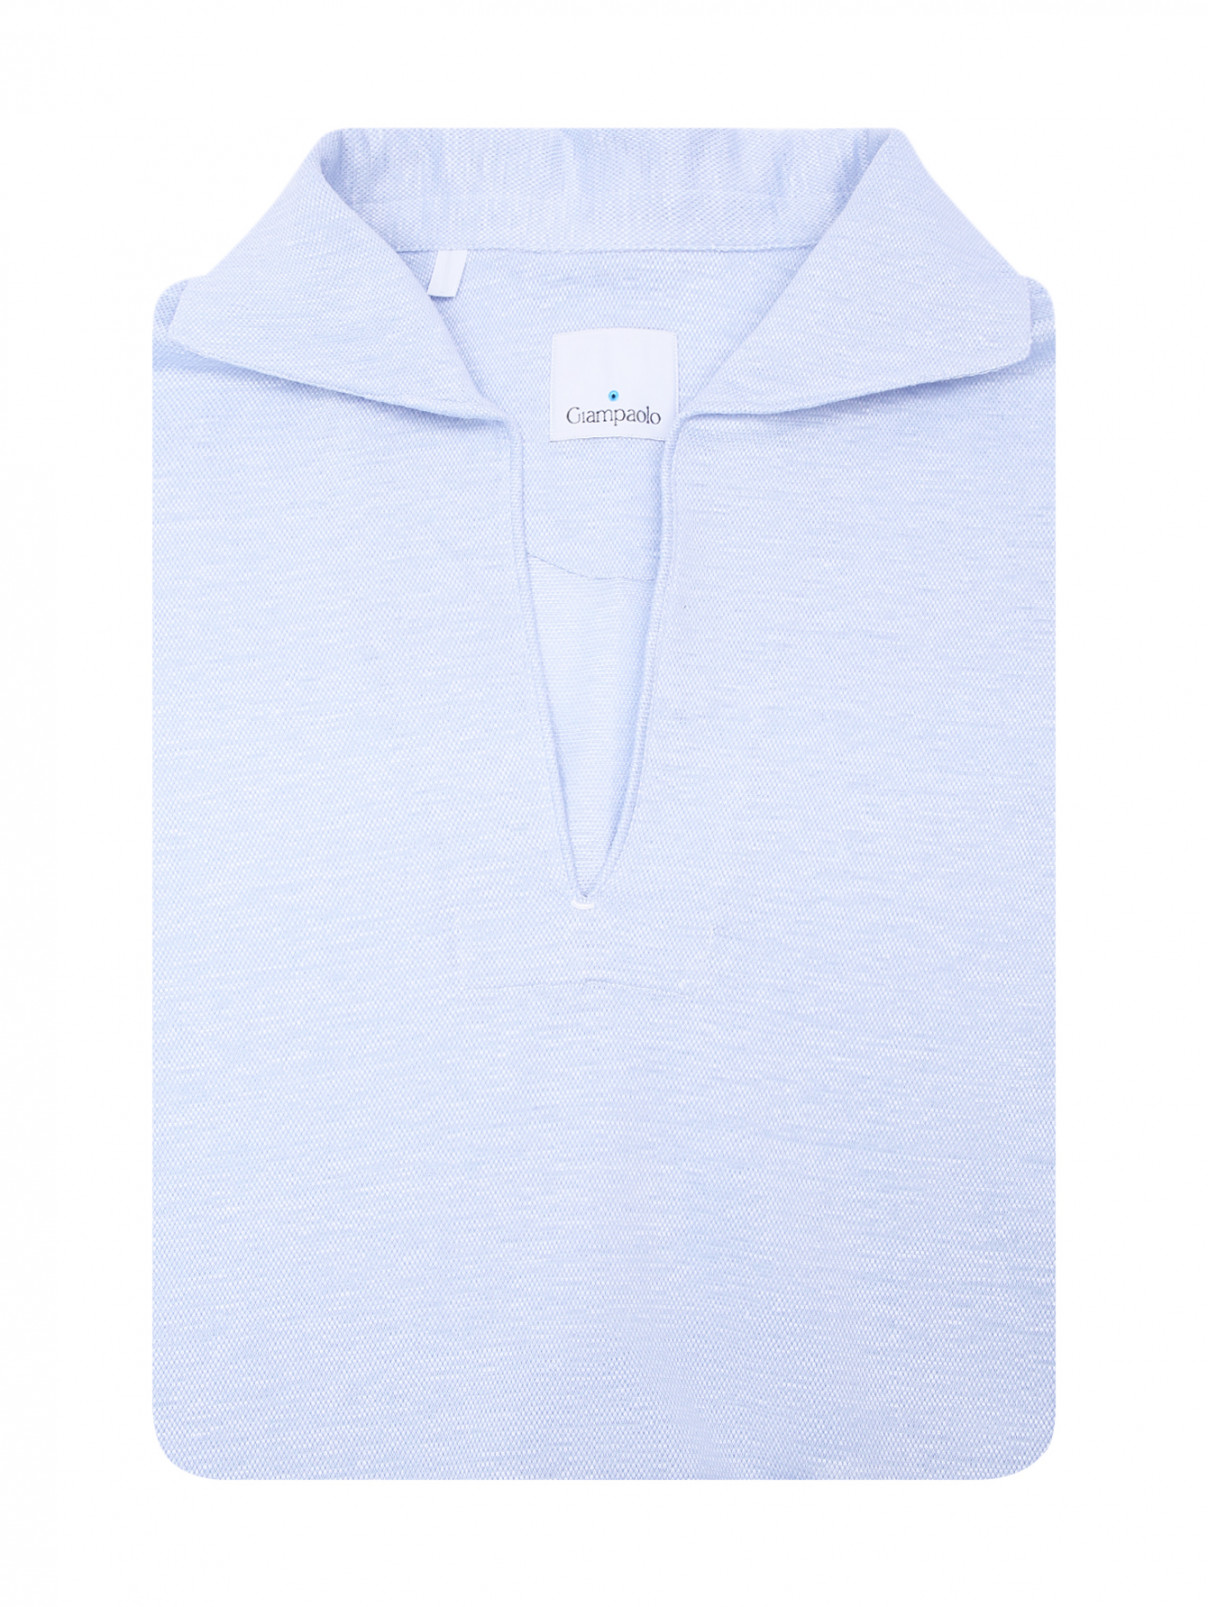 Рубашка изо льна и хлопка с короткими рукавами Giampaolo  –  Общий вид  – Цвет:  Синий